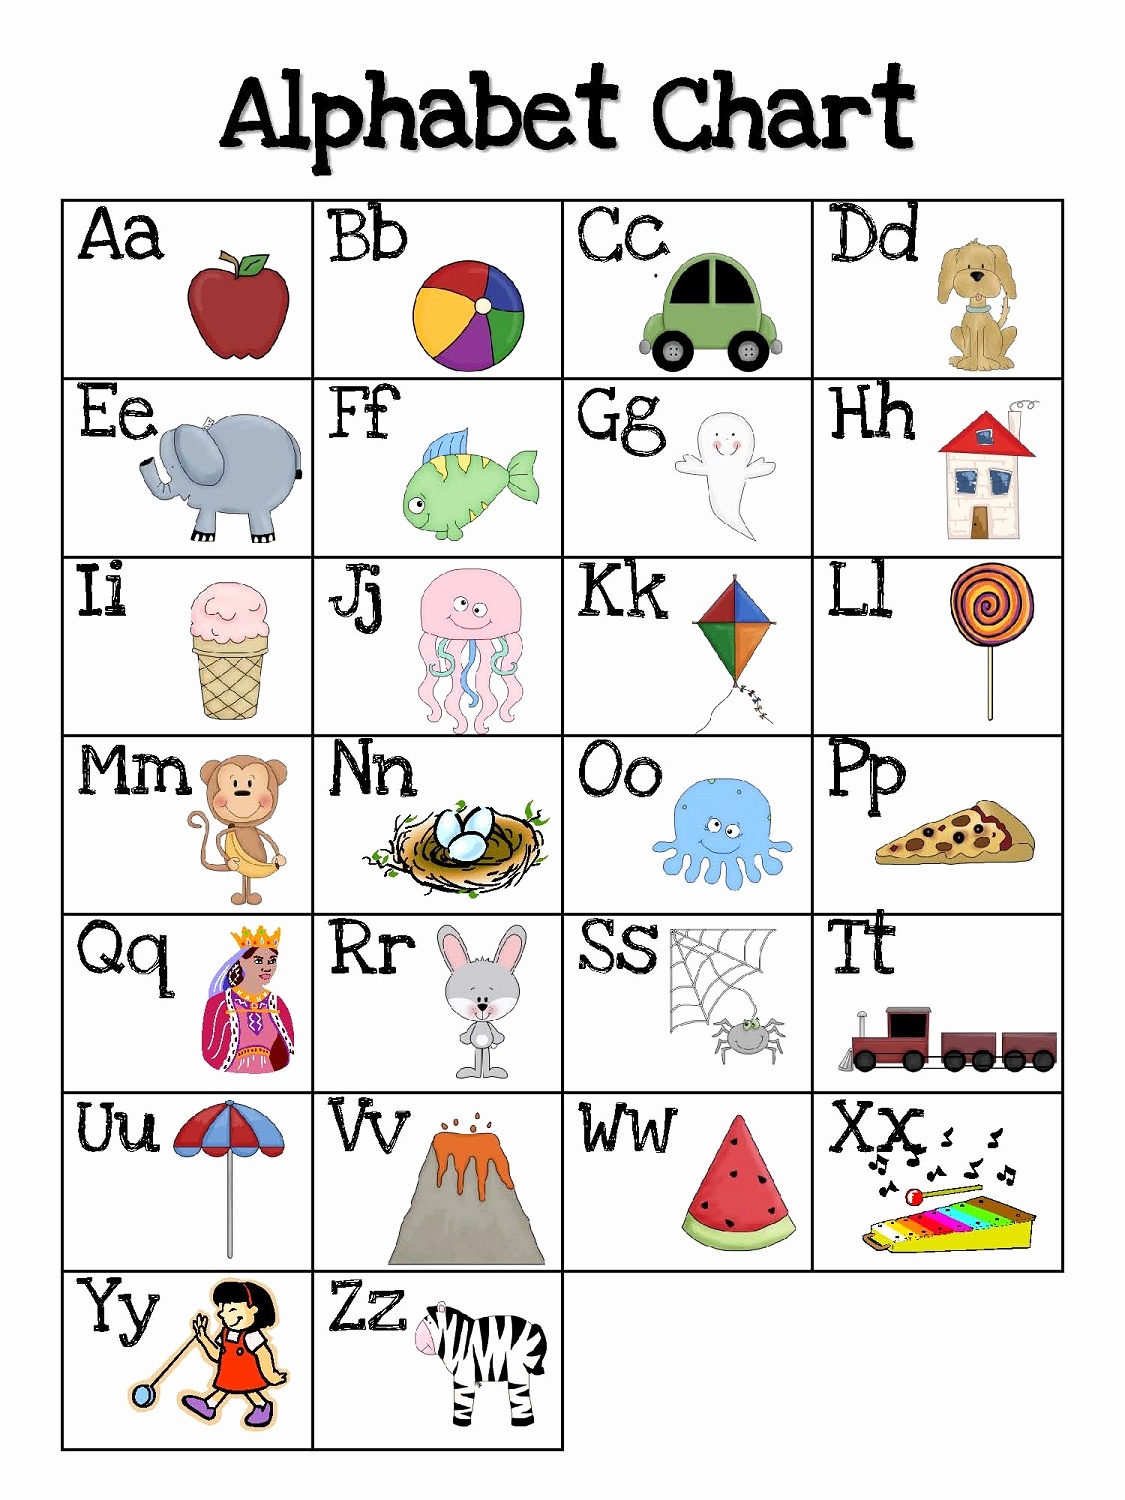 Printable Alphabet Chart